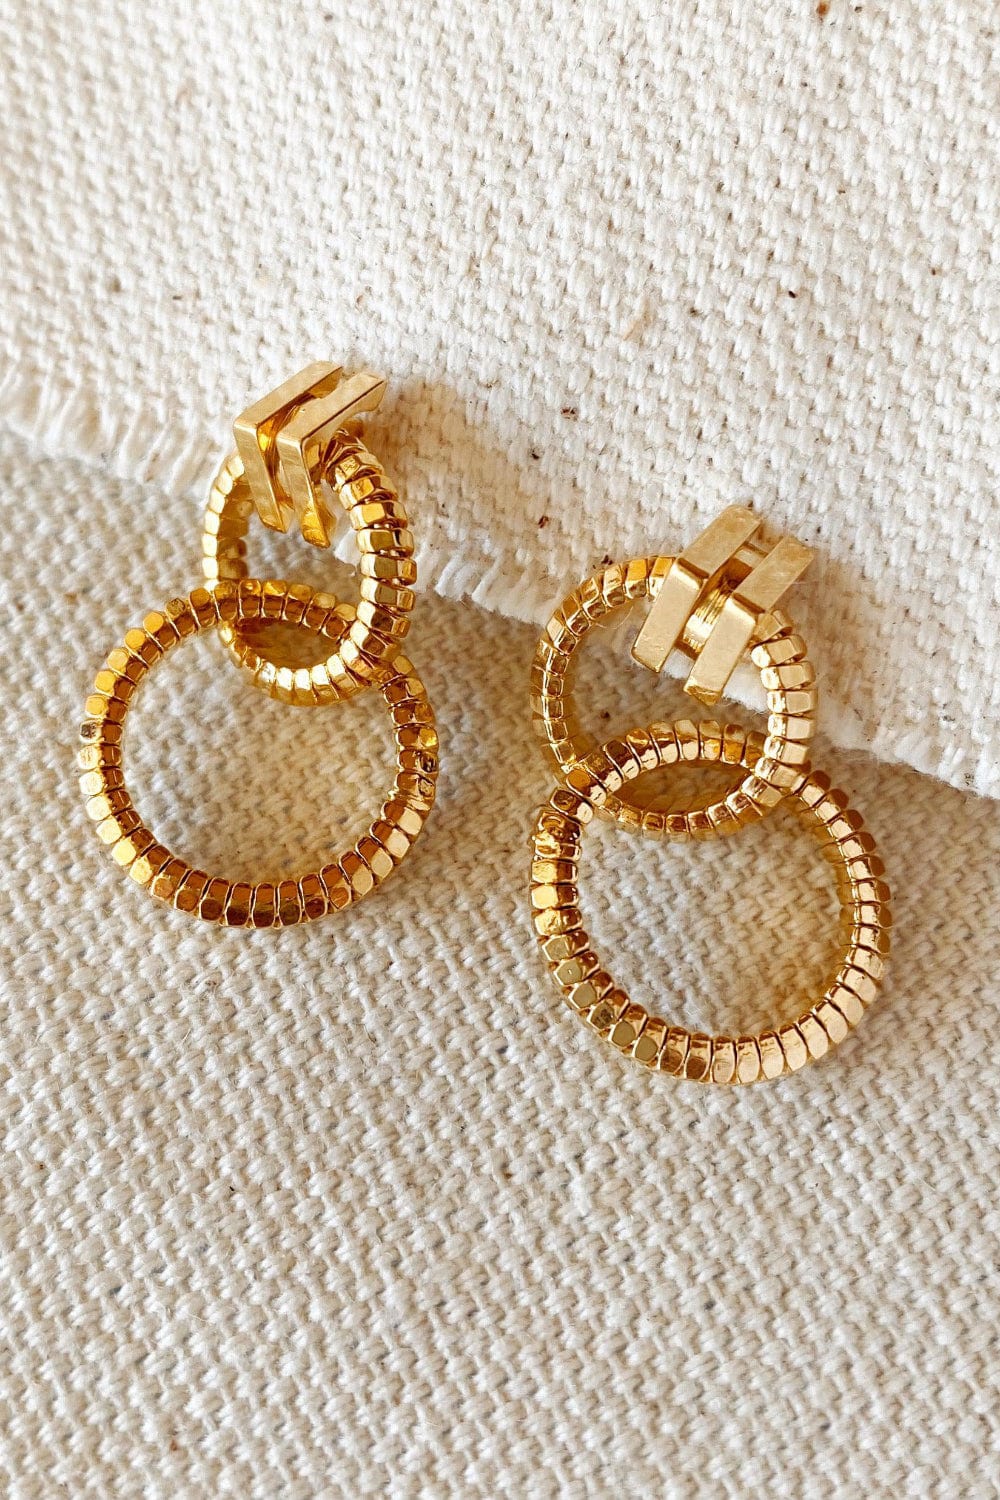 Double Dutch 18k Gold Filled Hoop Earrings - Earrings - Blooming Daily